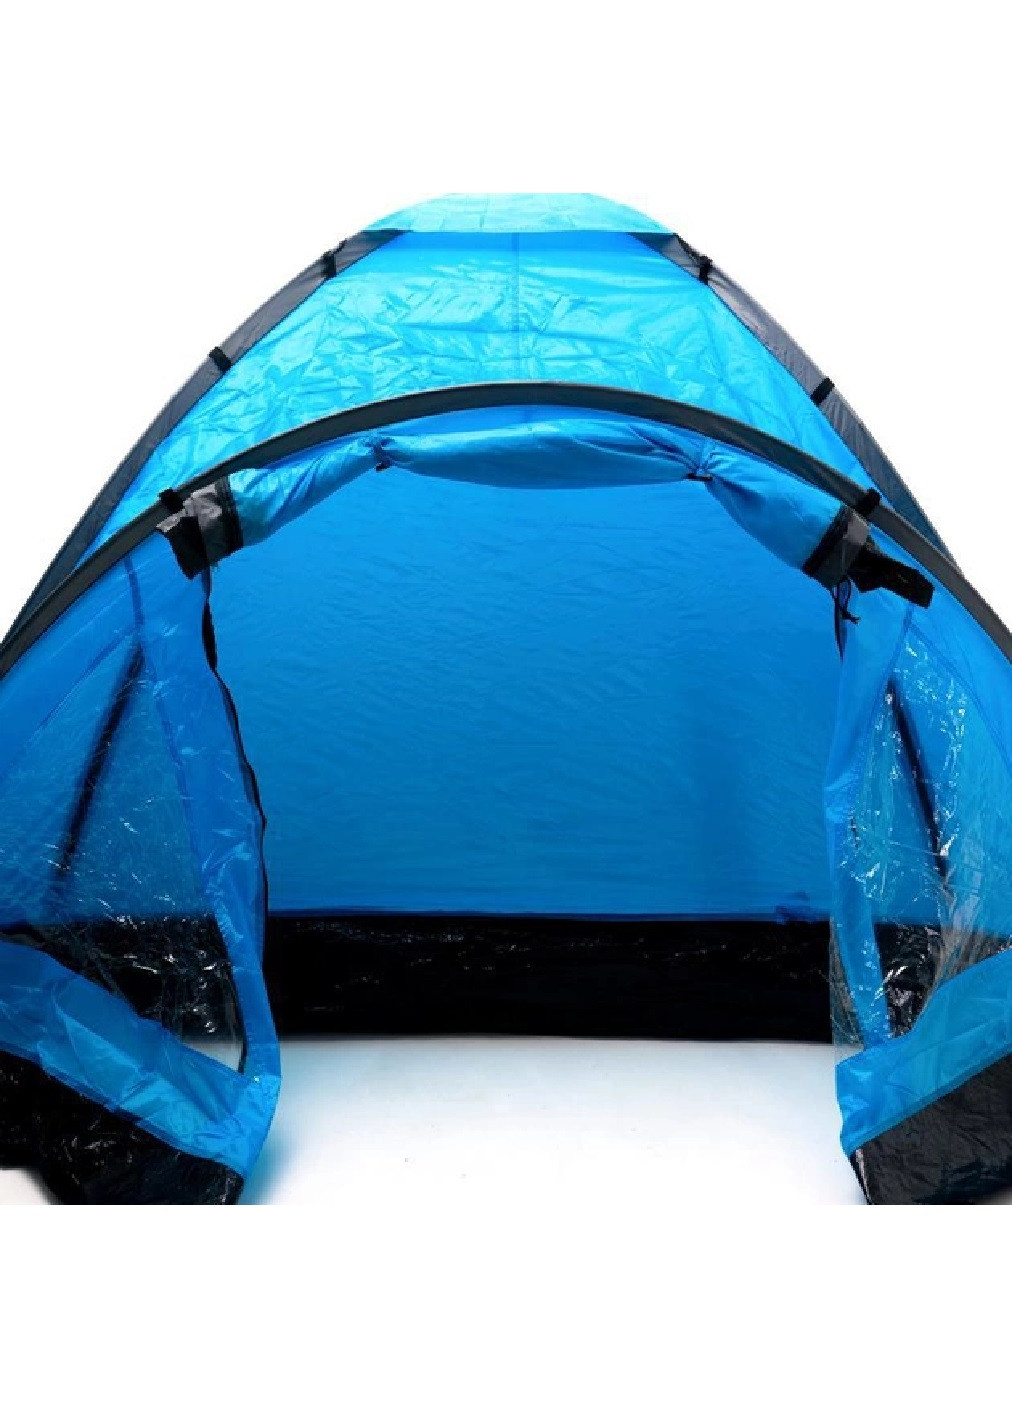 Палатка тент туристическая 3-х местная с тамбуром для кемпинга рыбалки туризма походов 130х90х210х210 см (475368-Prob) Unbranded (266418031)